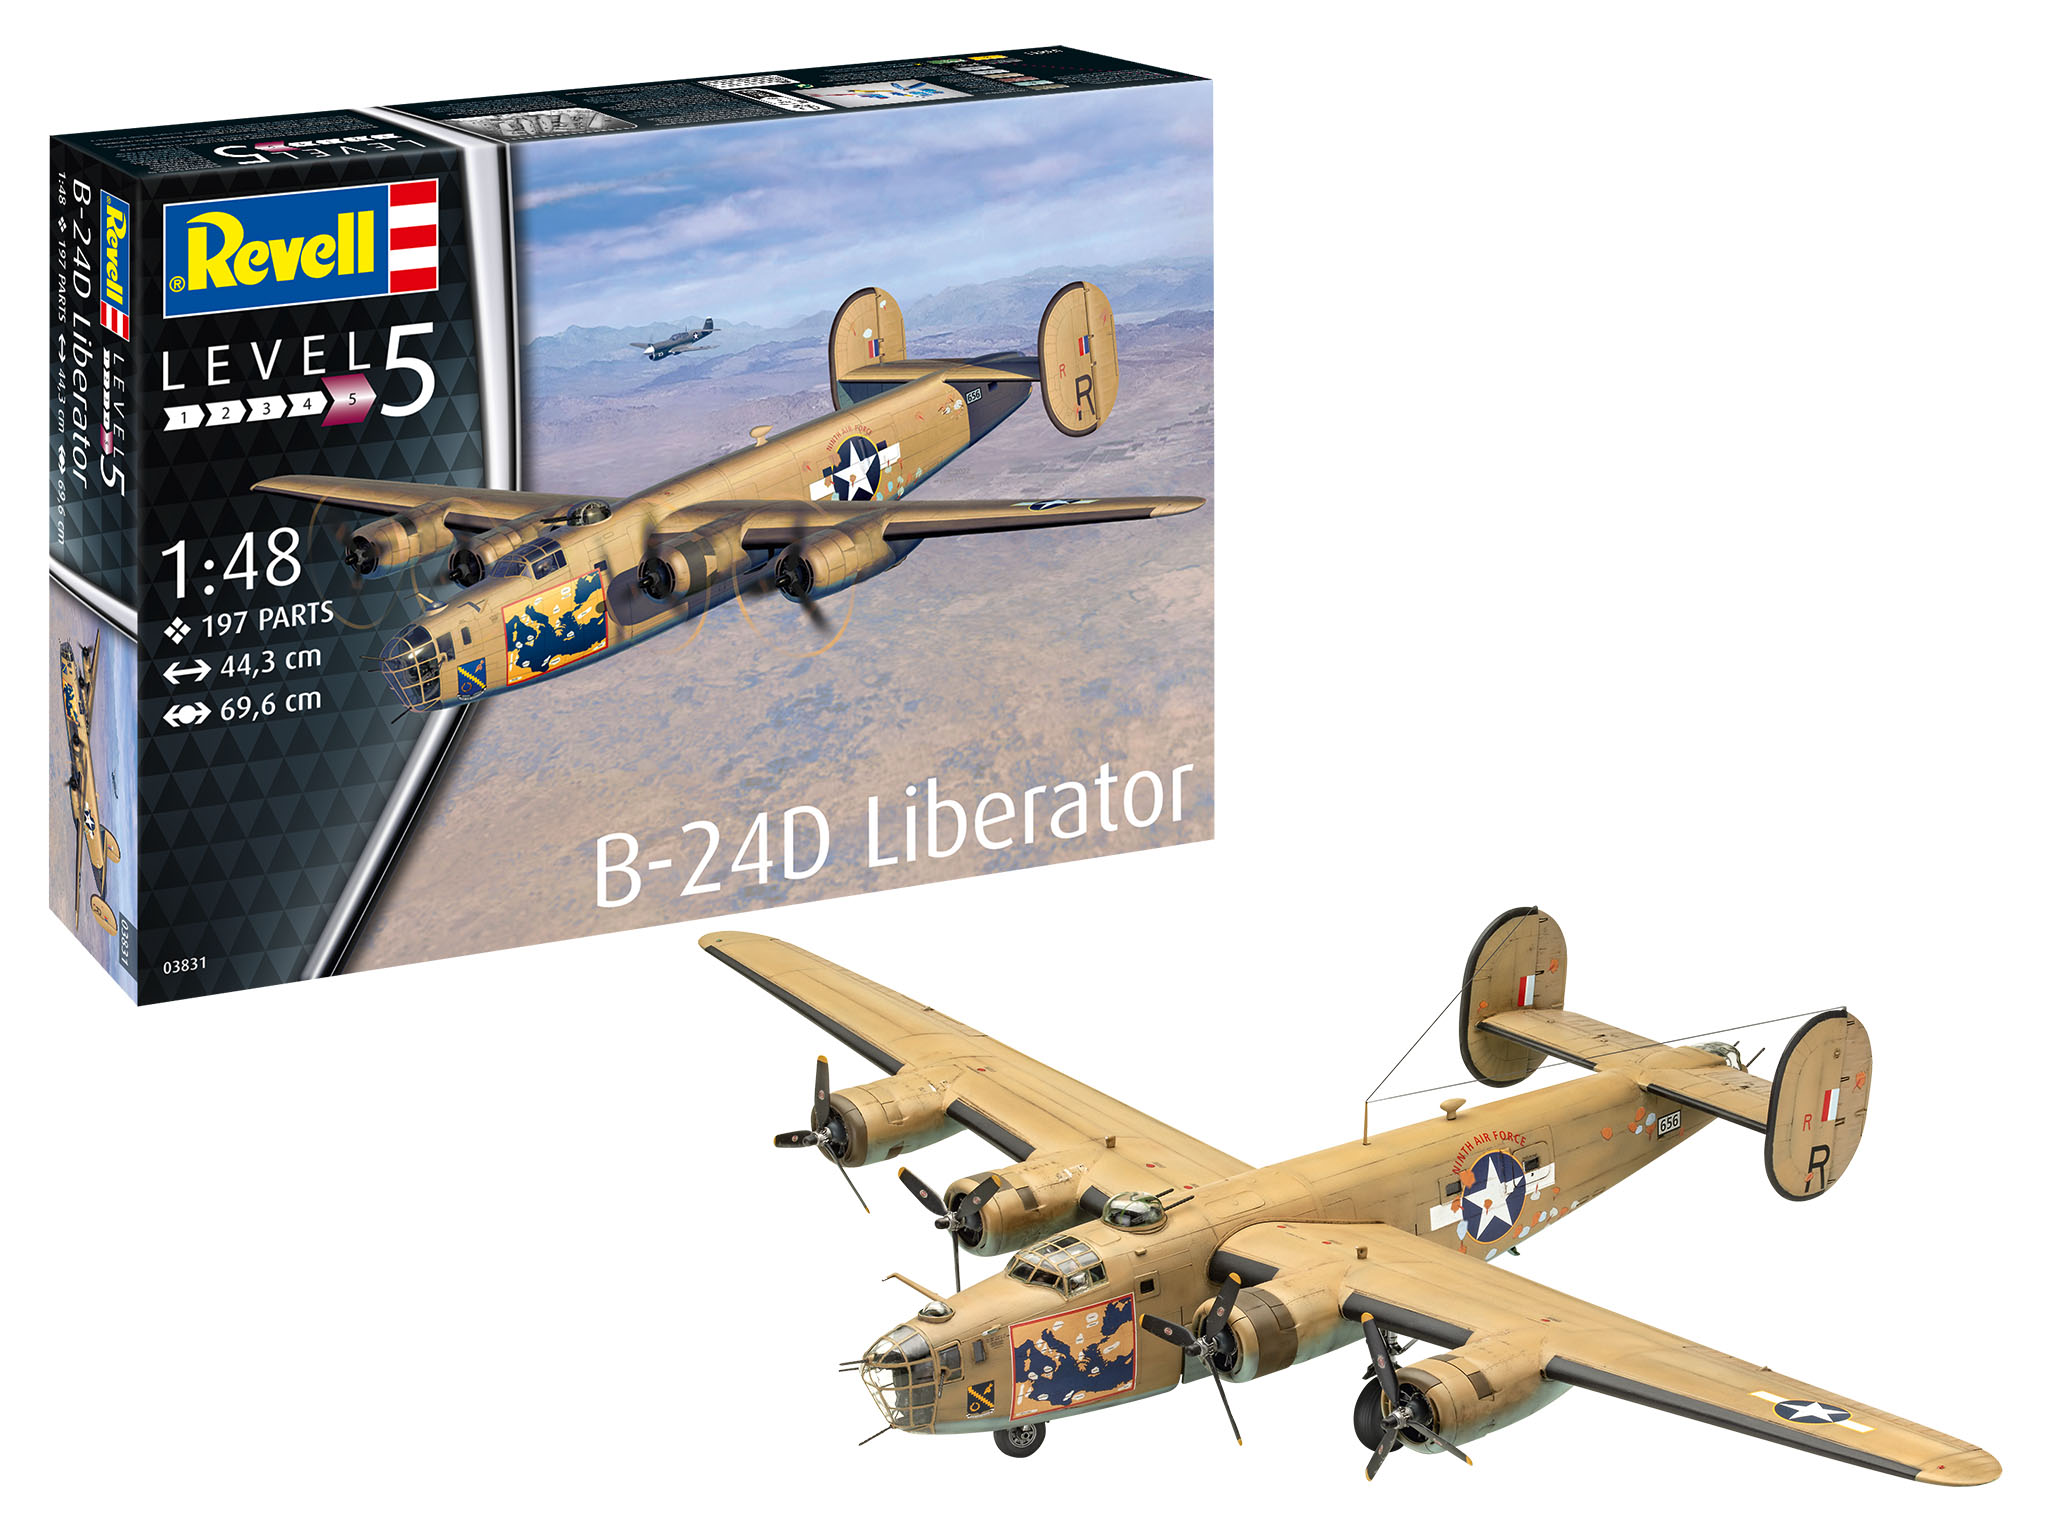 B-24D Liberator - 03831